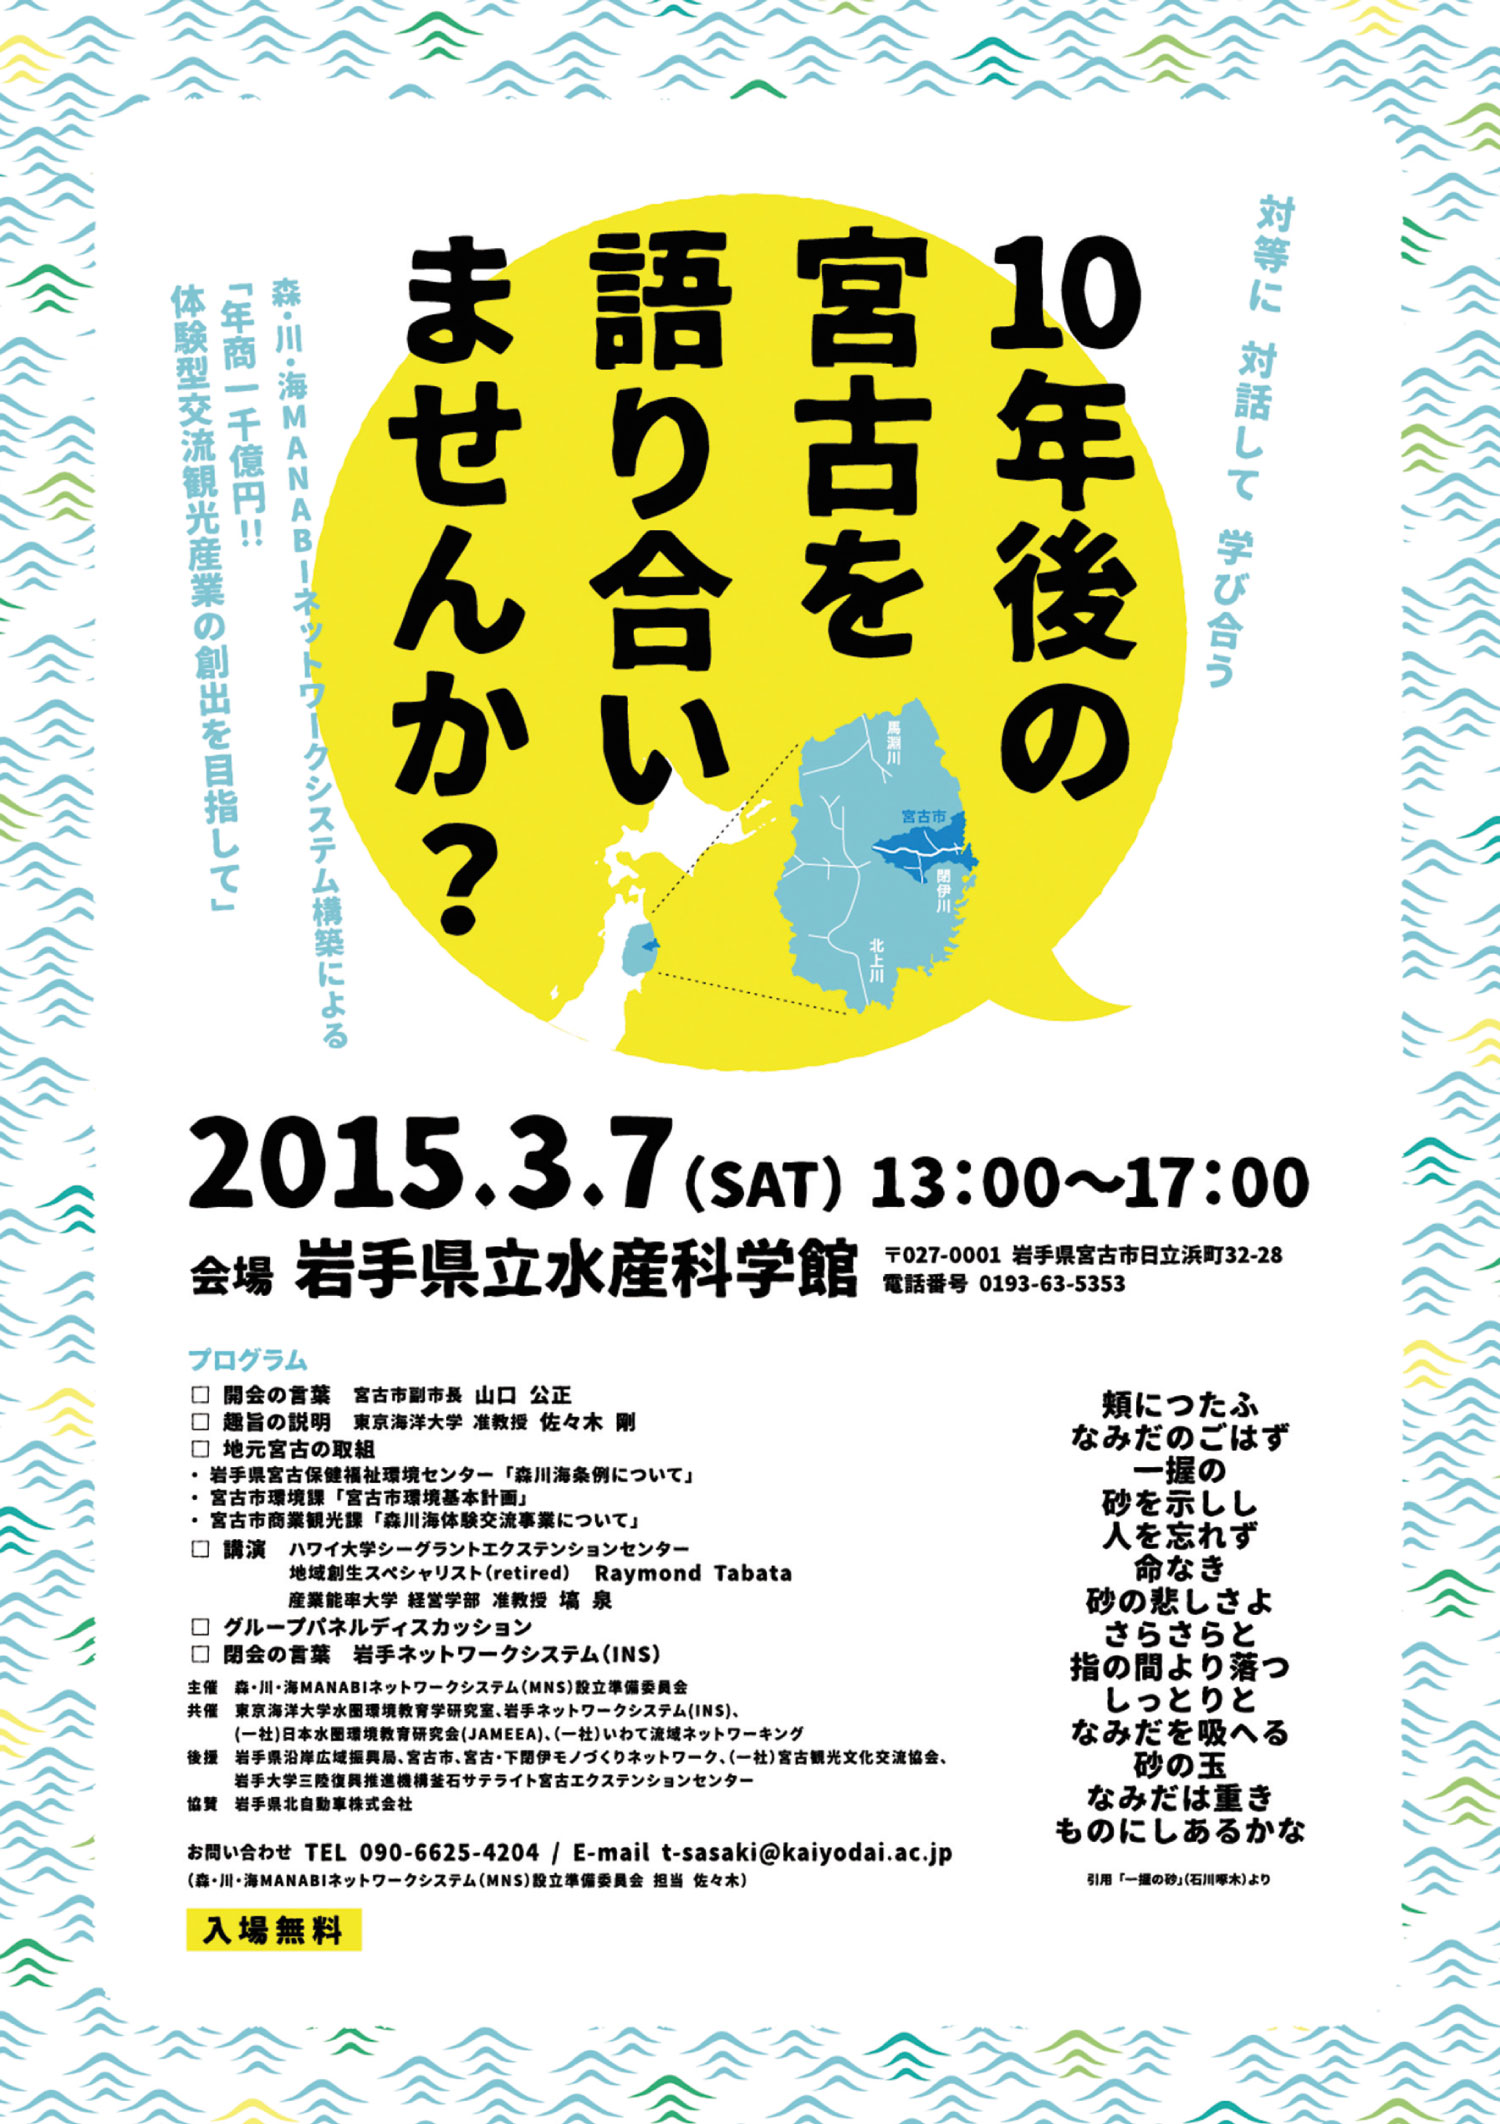 Mori Kawa Umi MANABI Networksystem Flyer